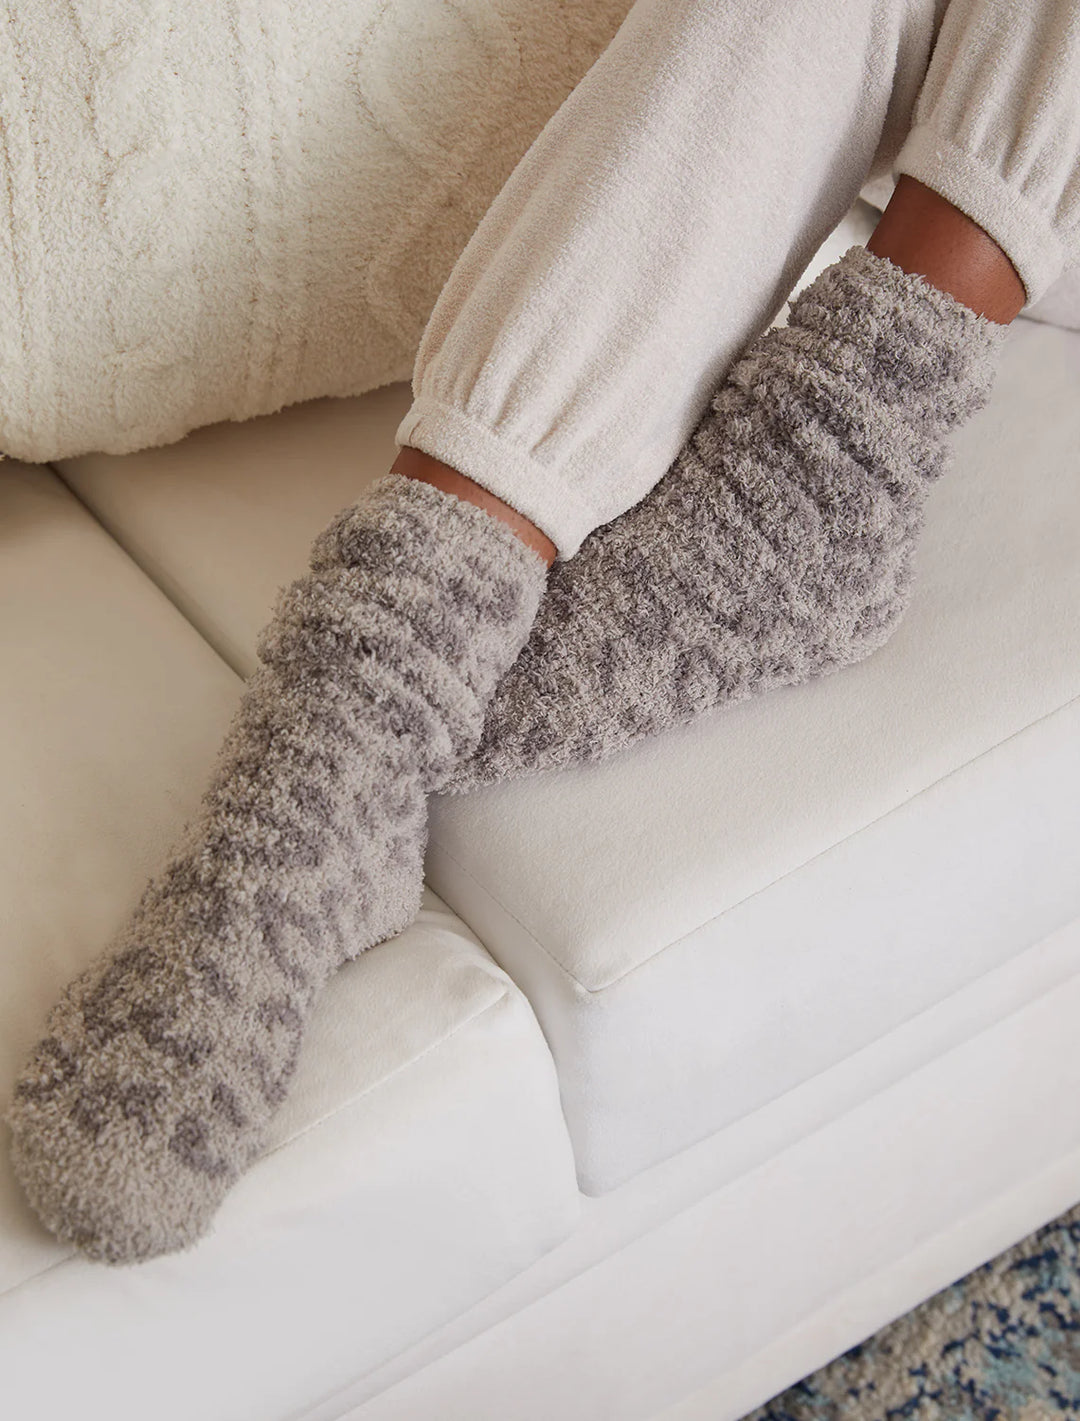 Barefoot Dreams CozyChic® Women's Barefoot in the Wild® 2 Pair Sock Set in Linen / Warm Gray Multi